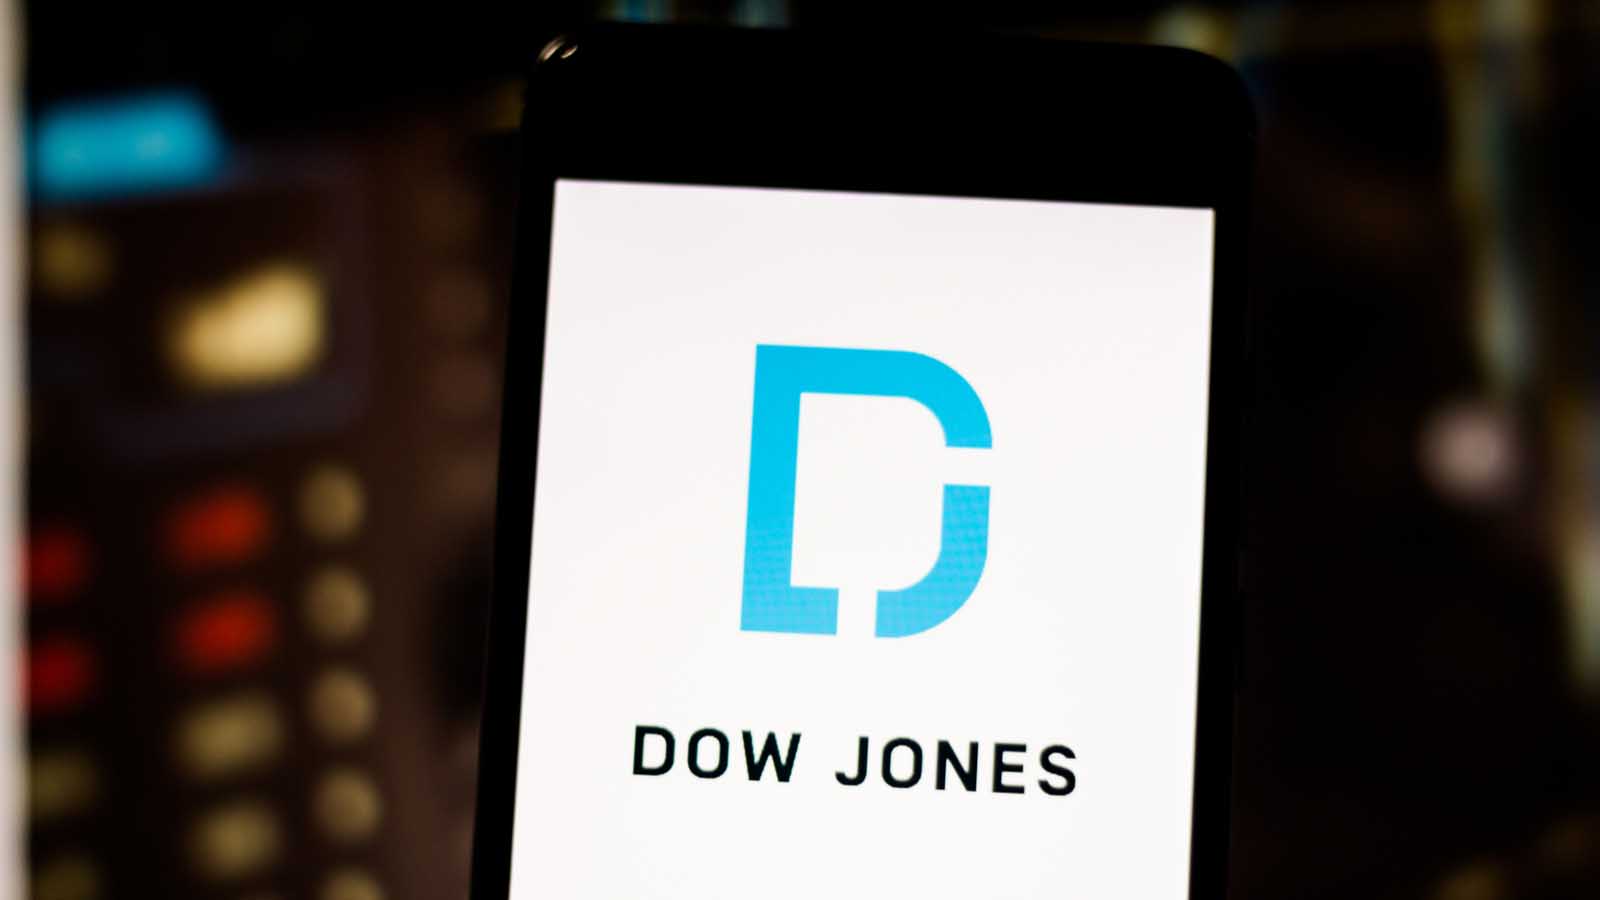 medida proporcionar Impuro 3 Dow Jones Stocks to Buy Right Now: HD, WMT, JPM | InvestorPlace